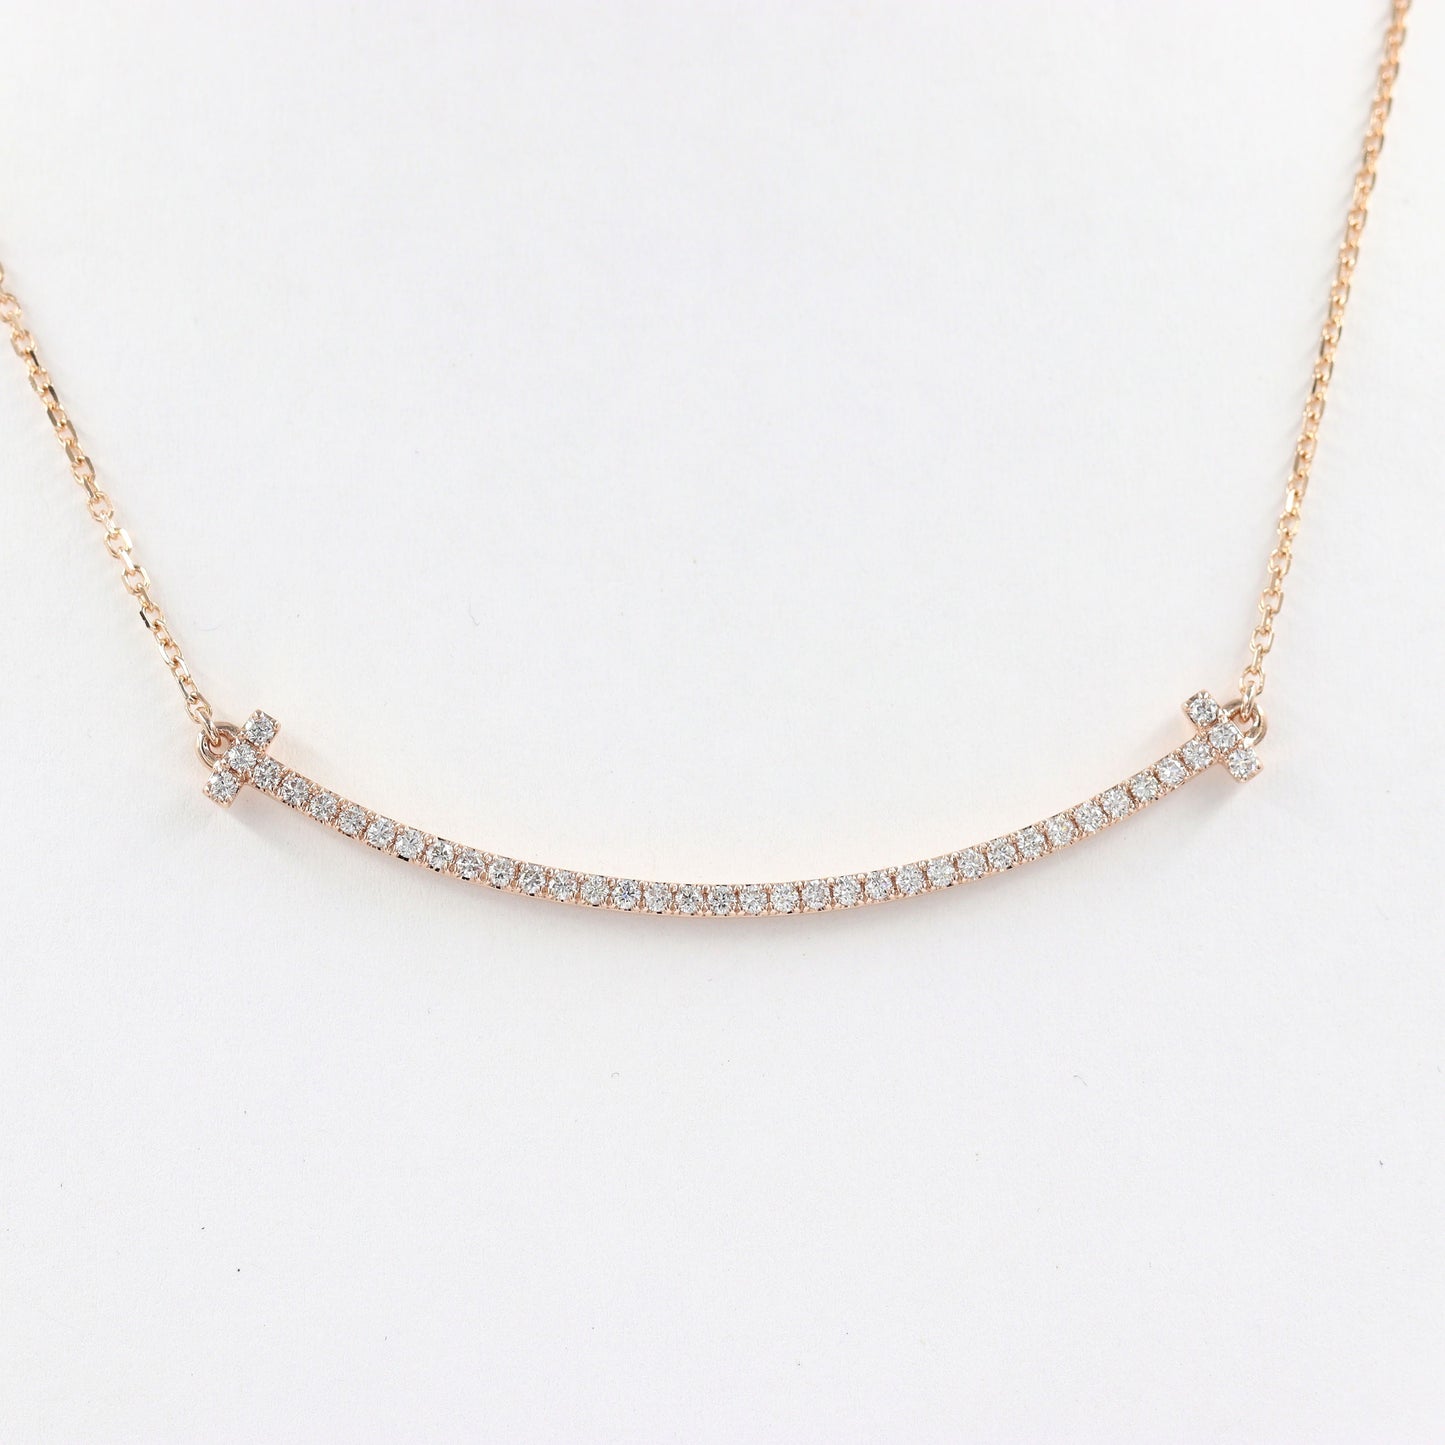 Diamond bar Necklace / Smile Pendant / 14K Gold Necklace / Anniversary Necklace / Anniversary Gift / Gift for Her